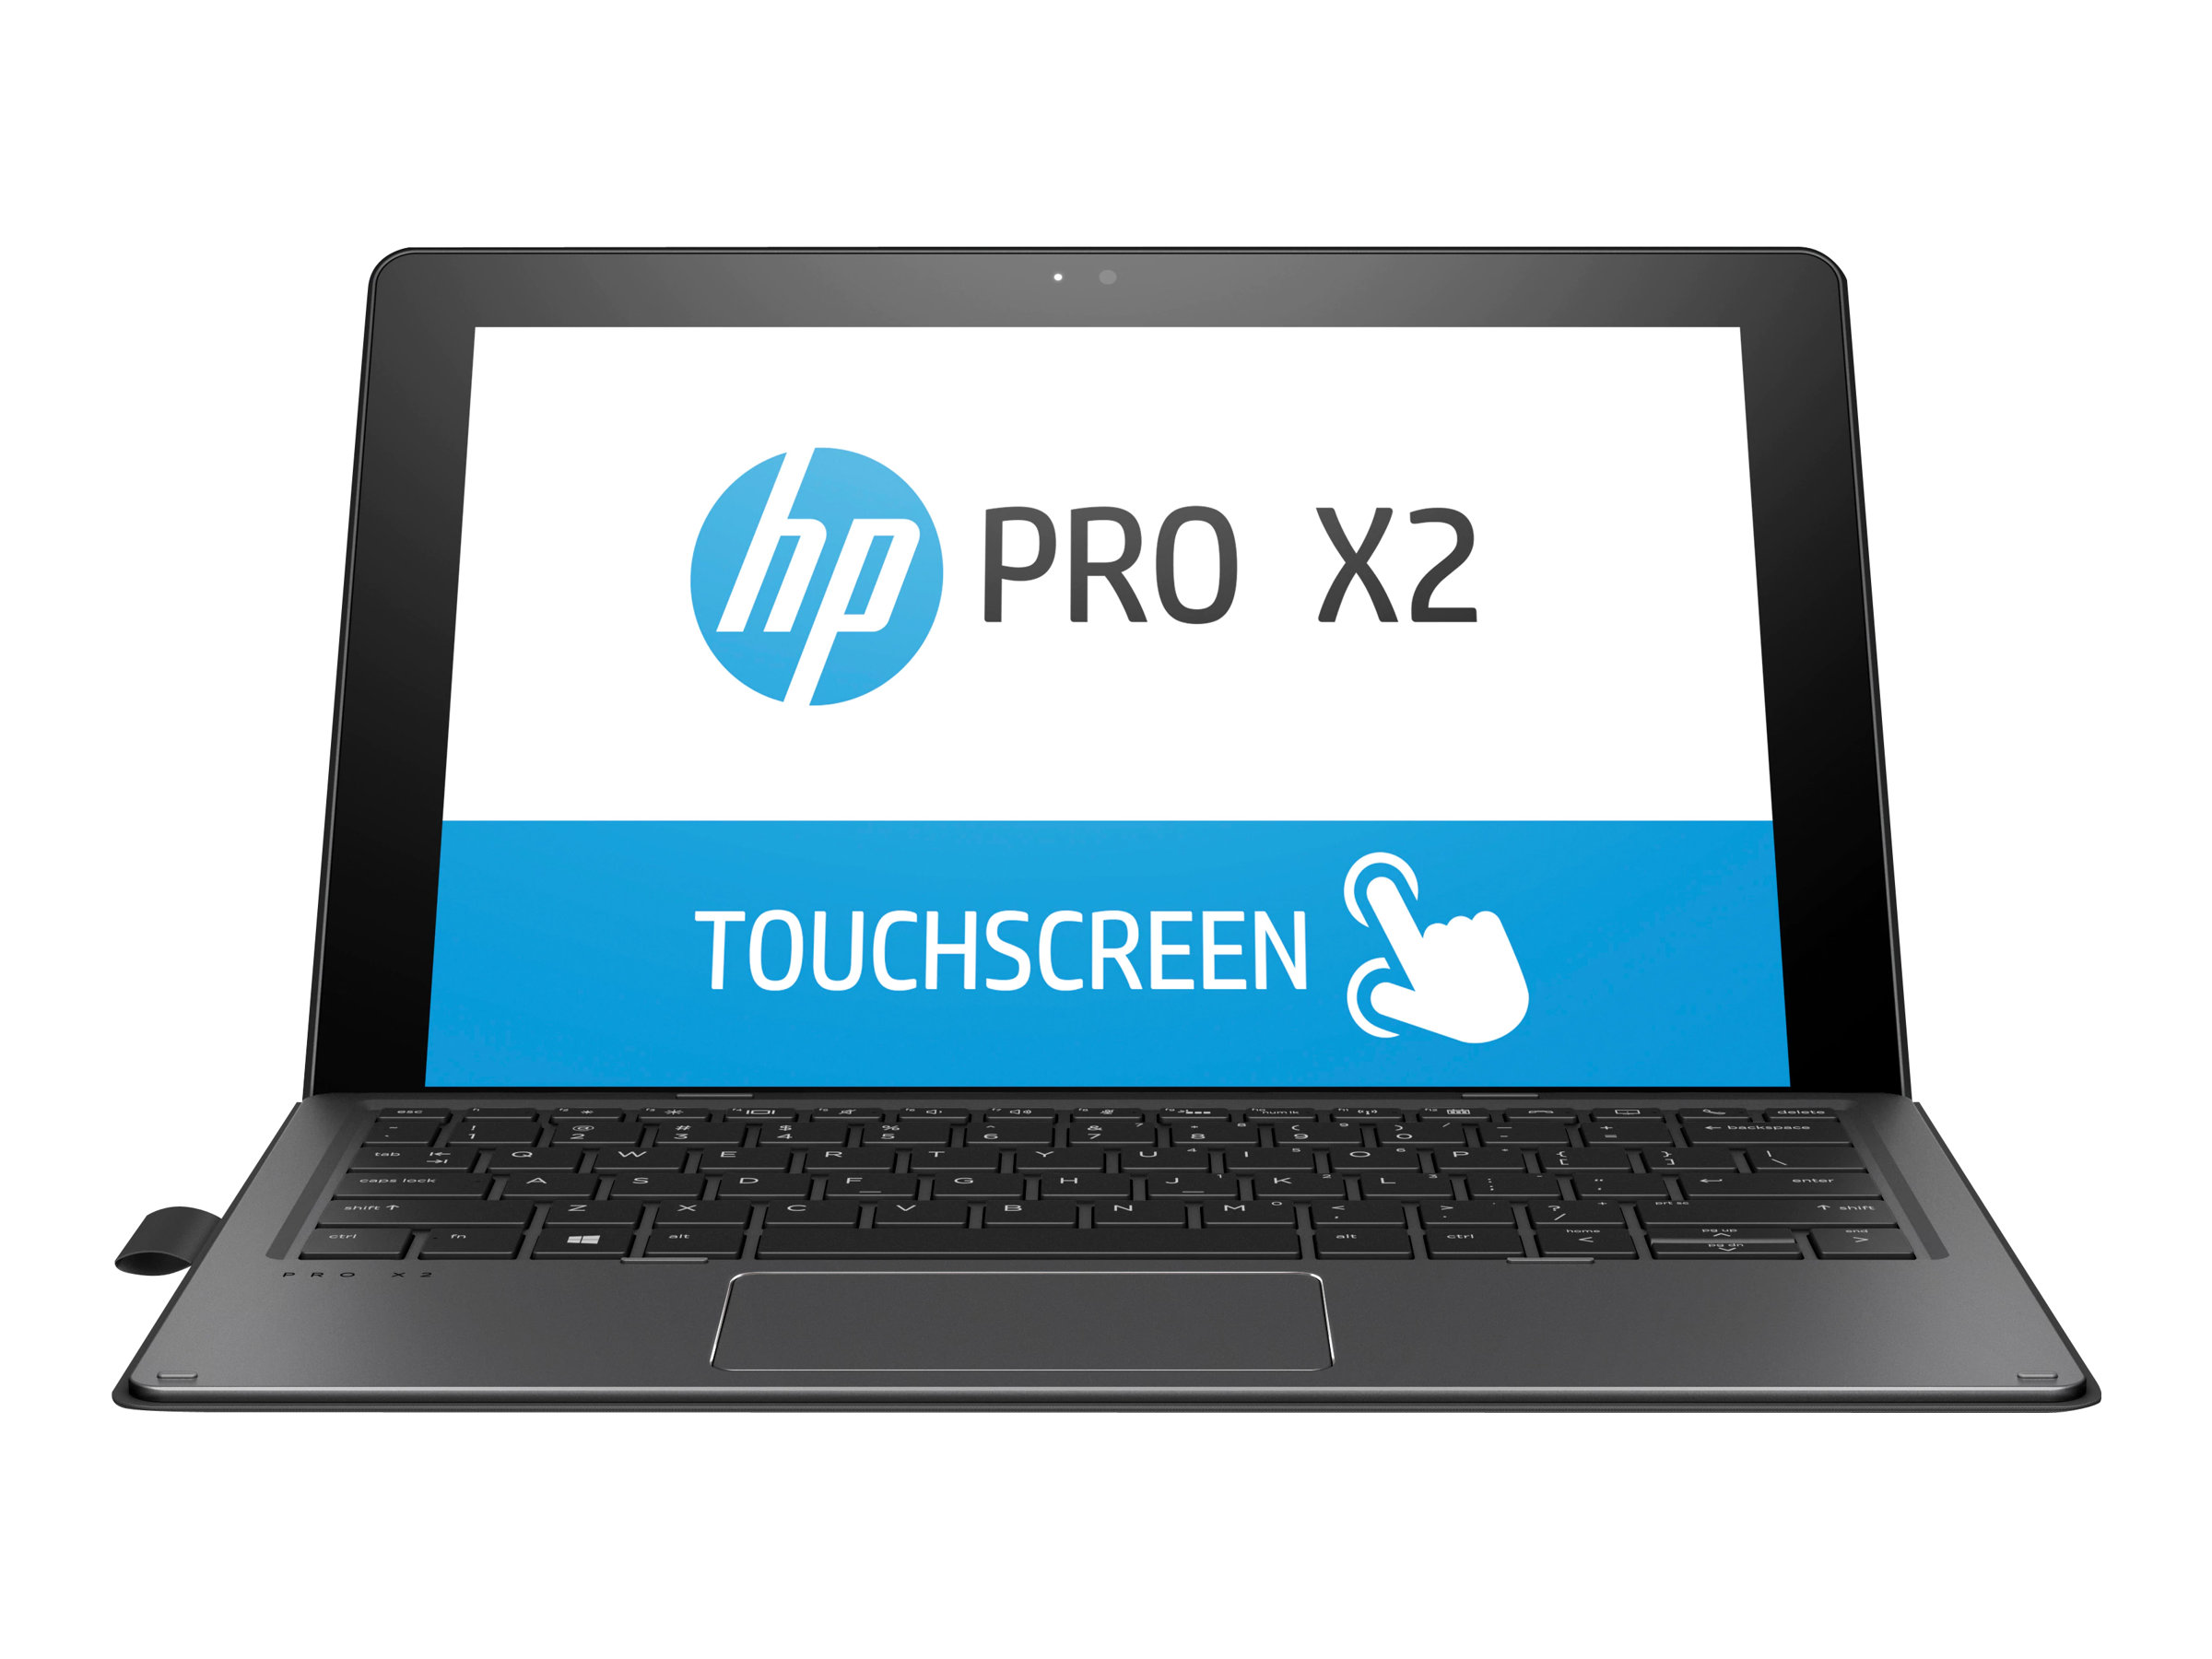 HP Pro x2 (612 G2)